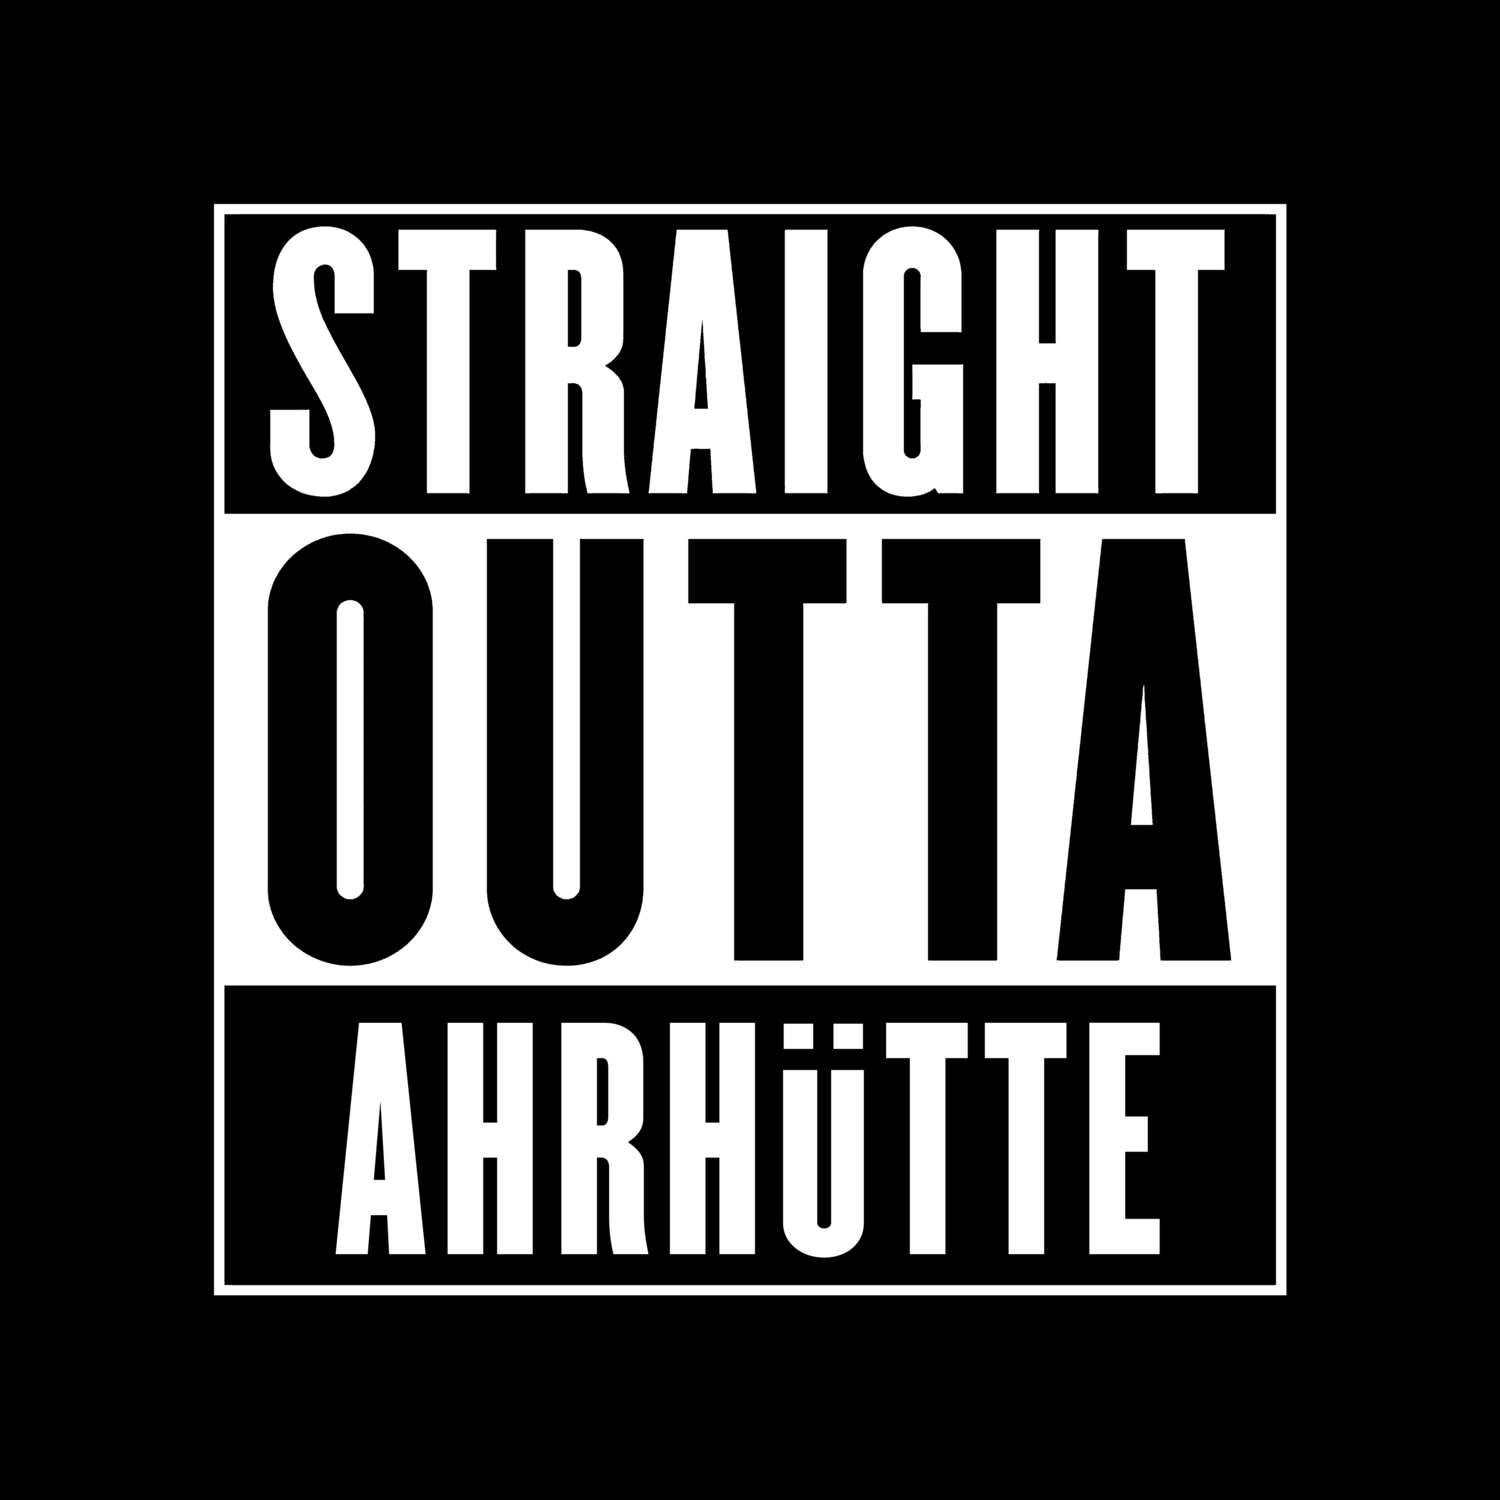 Ahrhütte T-Shirt »Straight Outta«